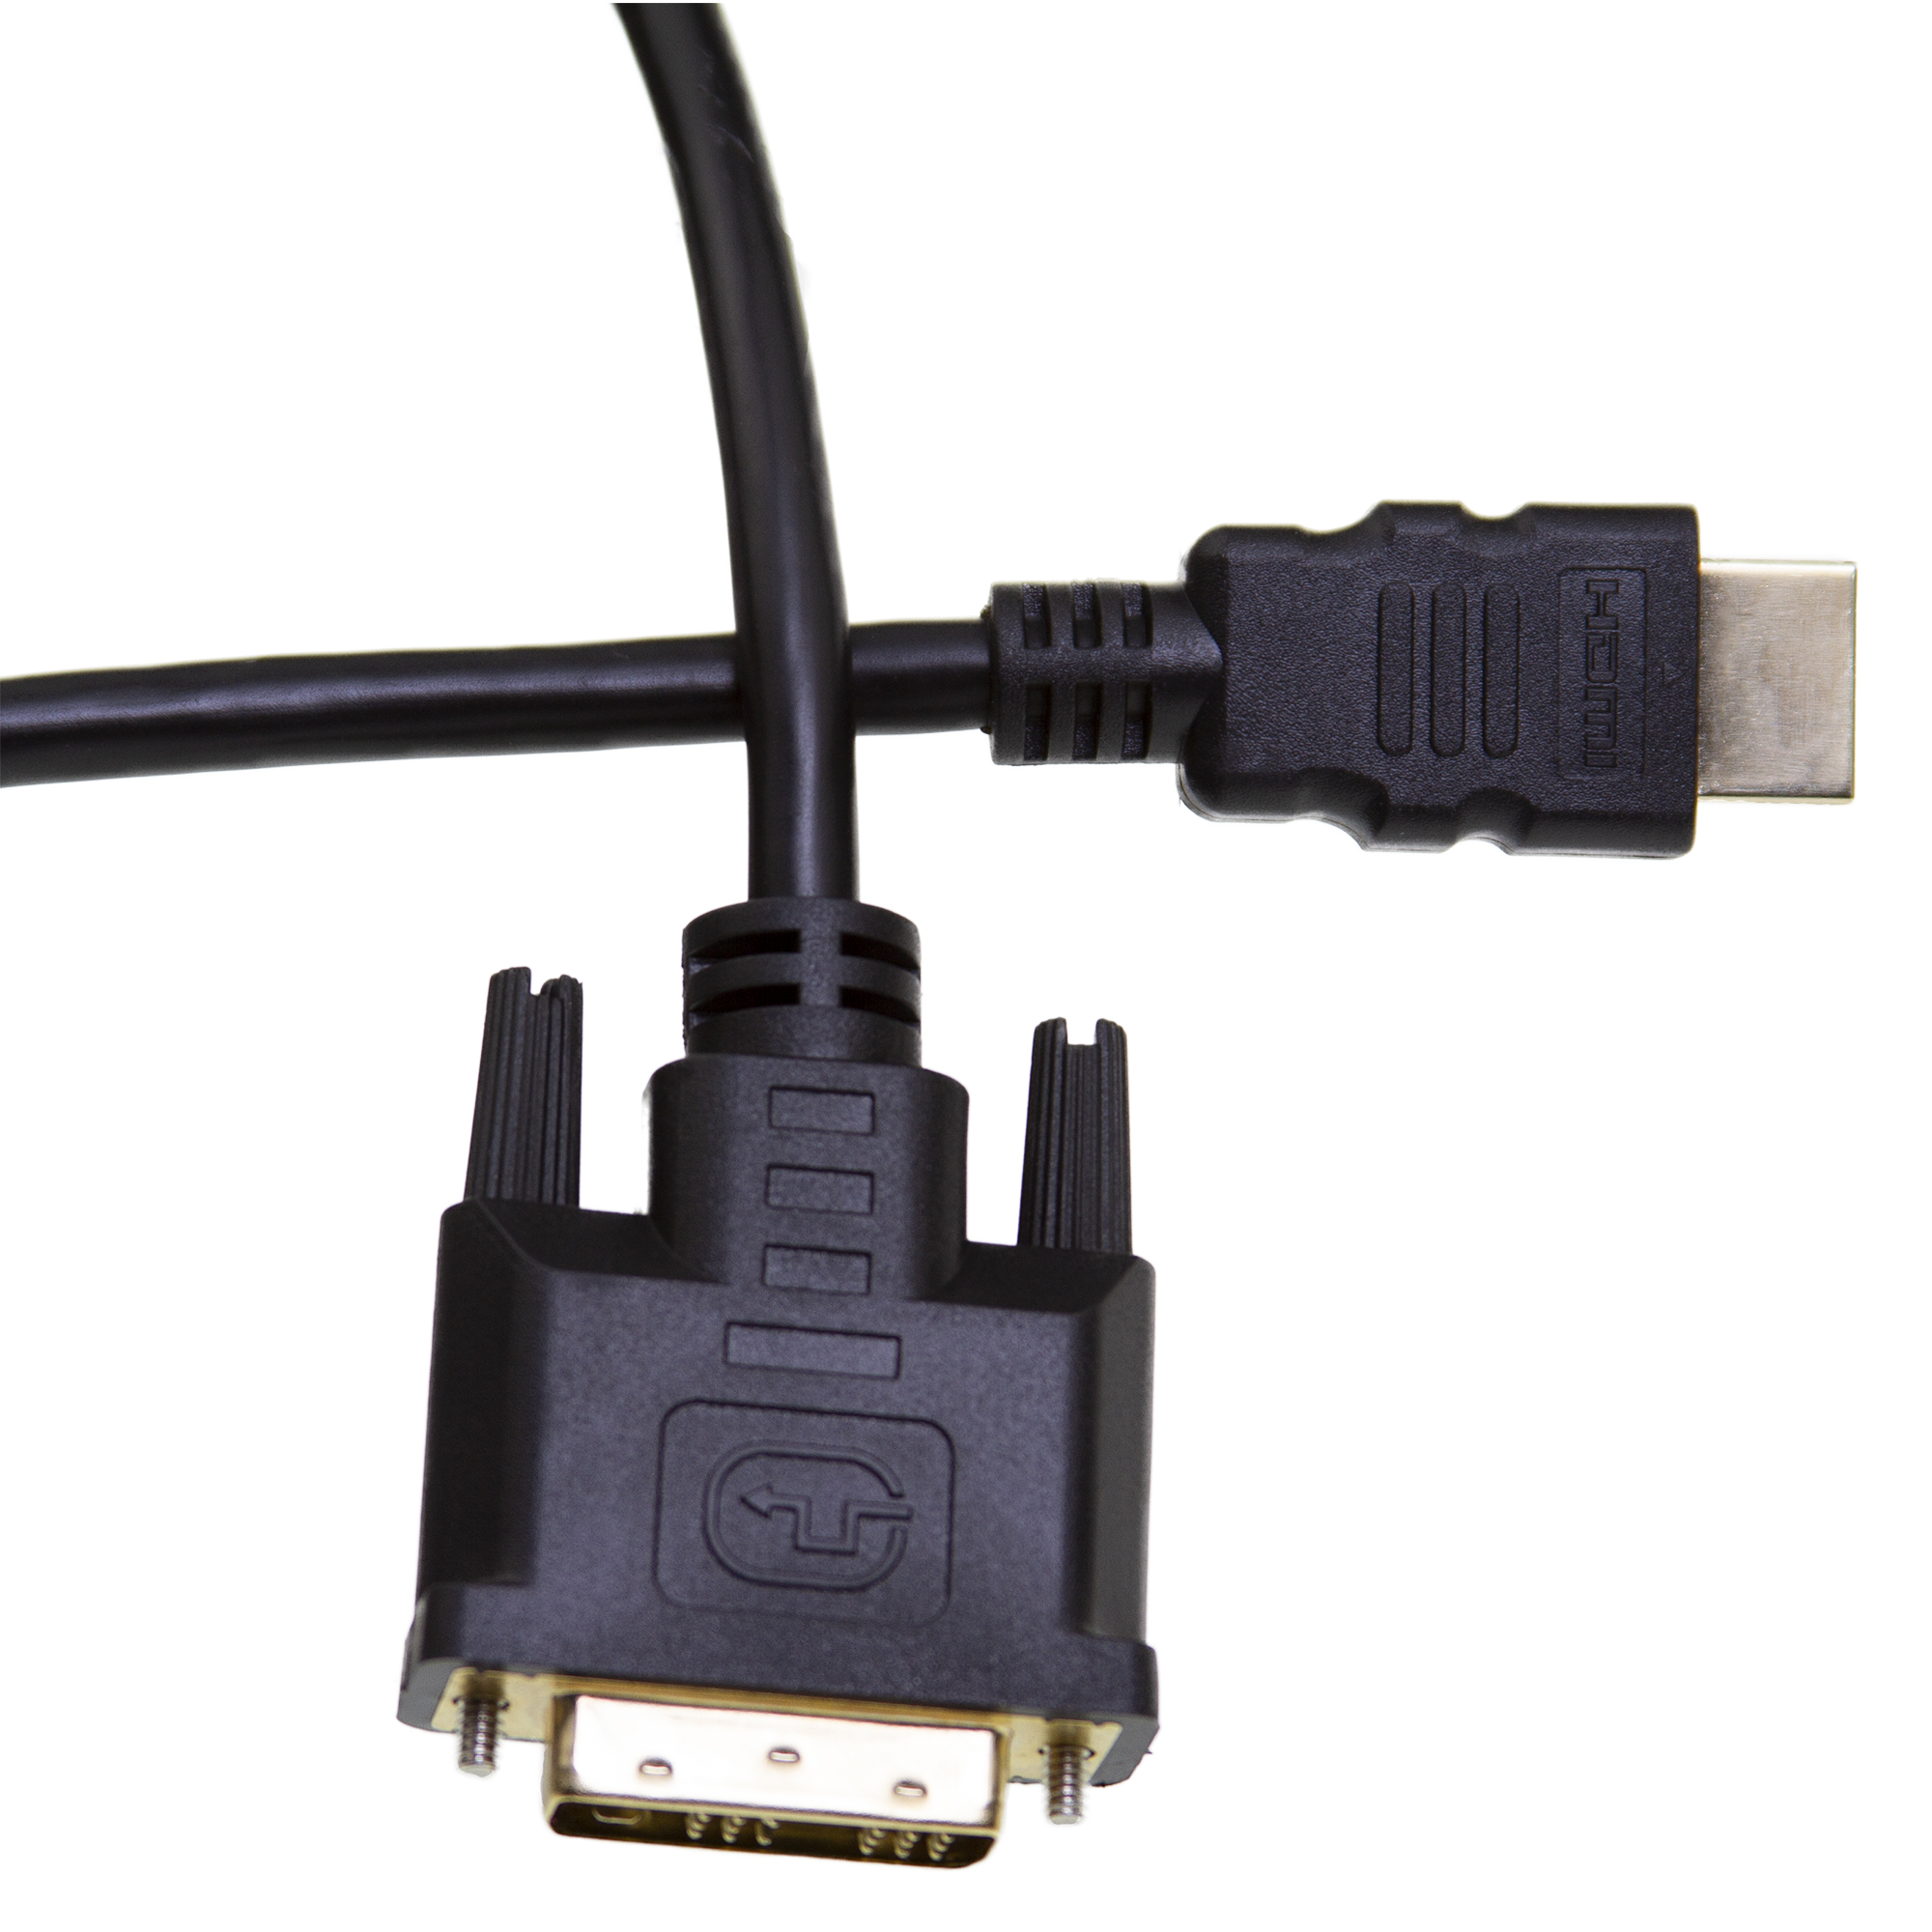 HDMI-DVI Converter cable - DH-HTD10BK